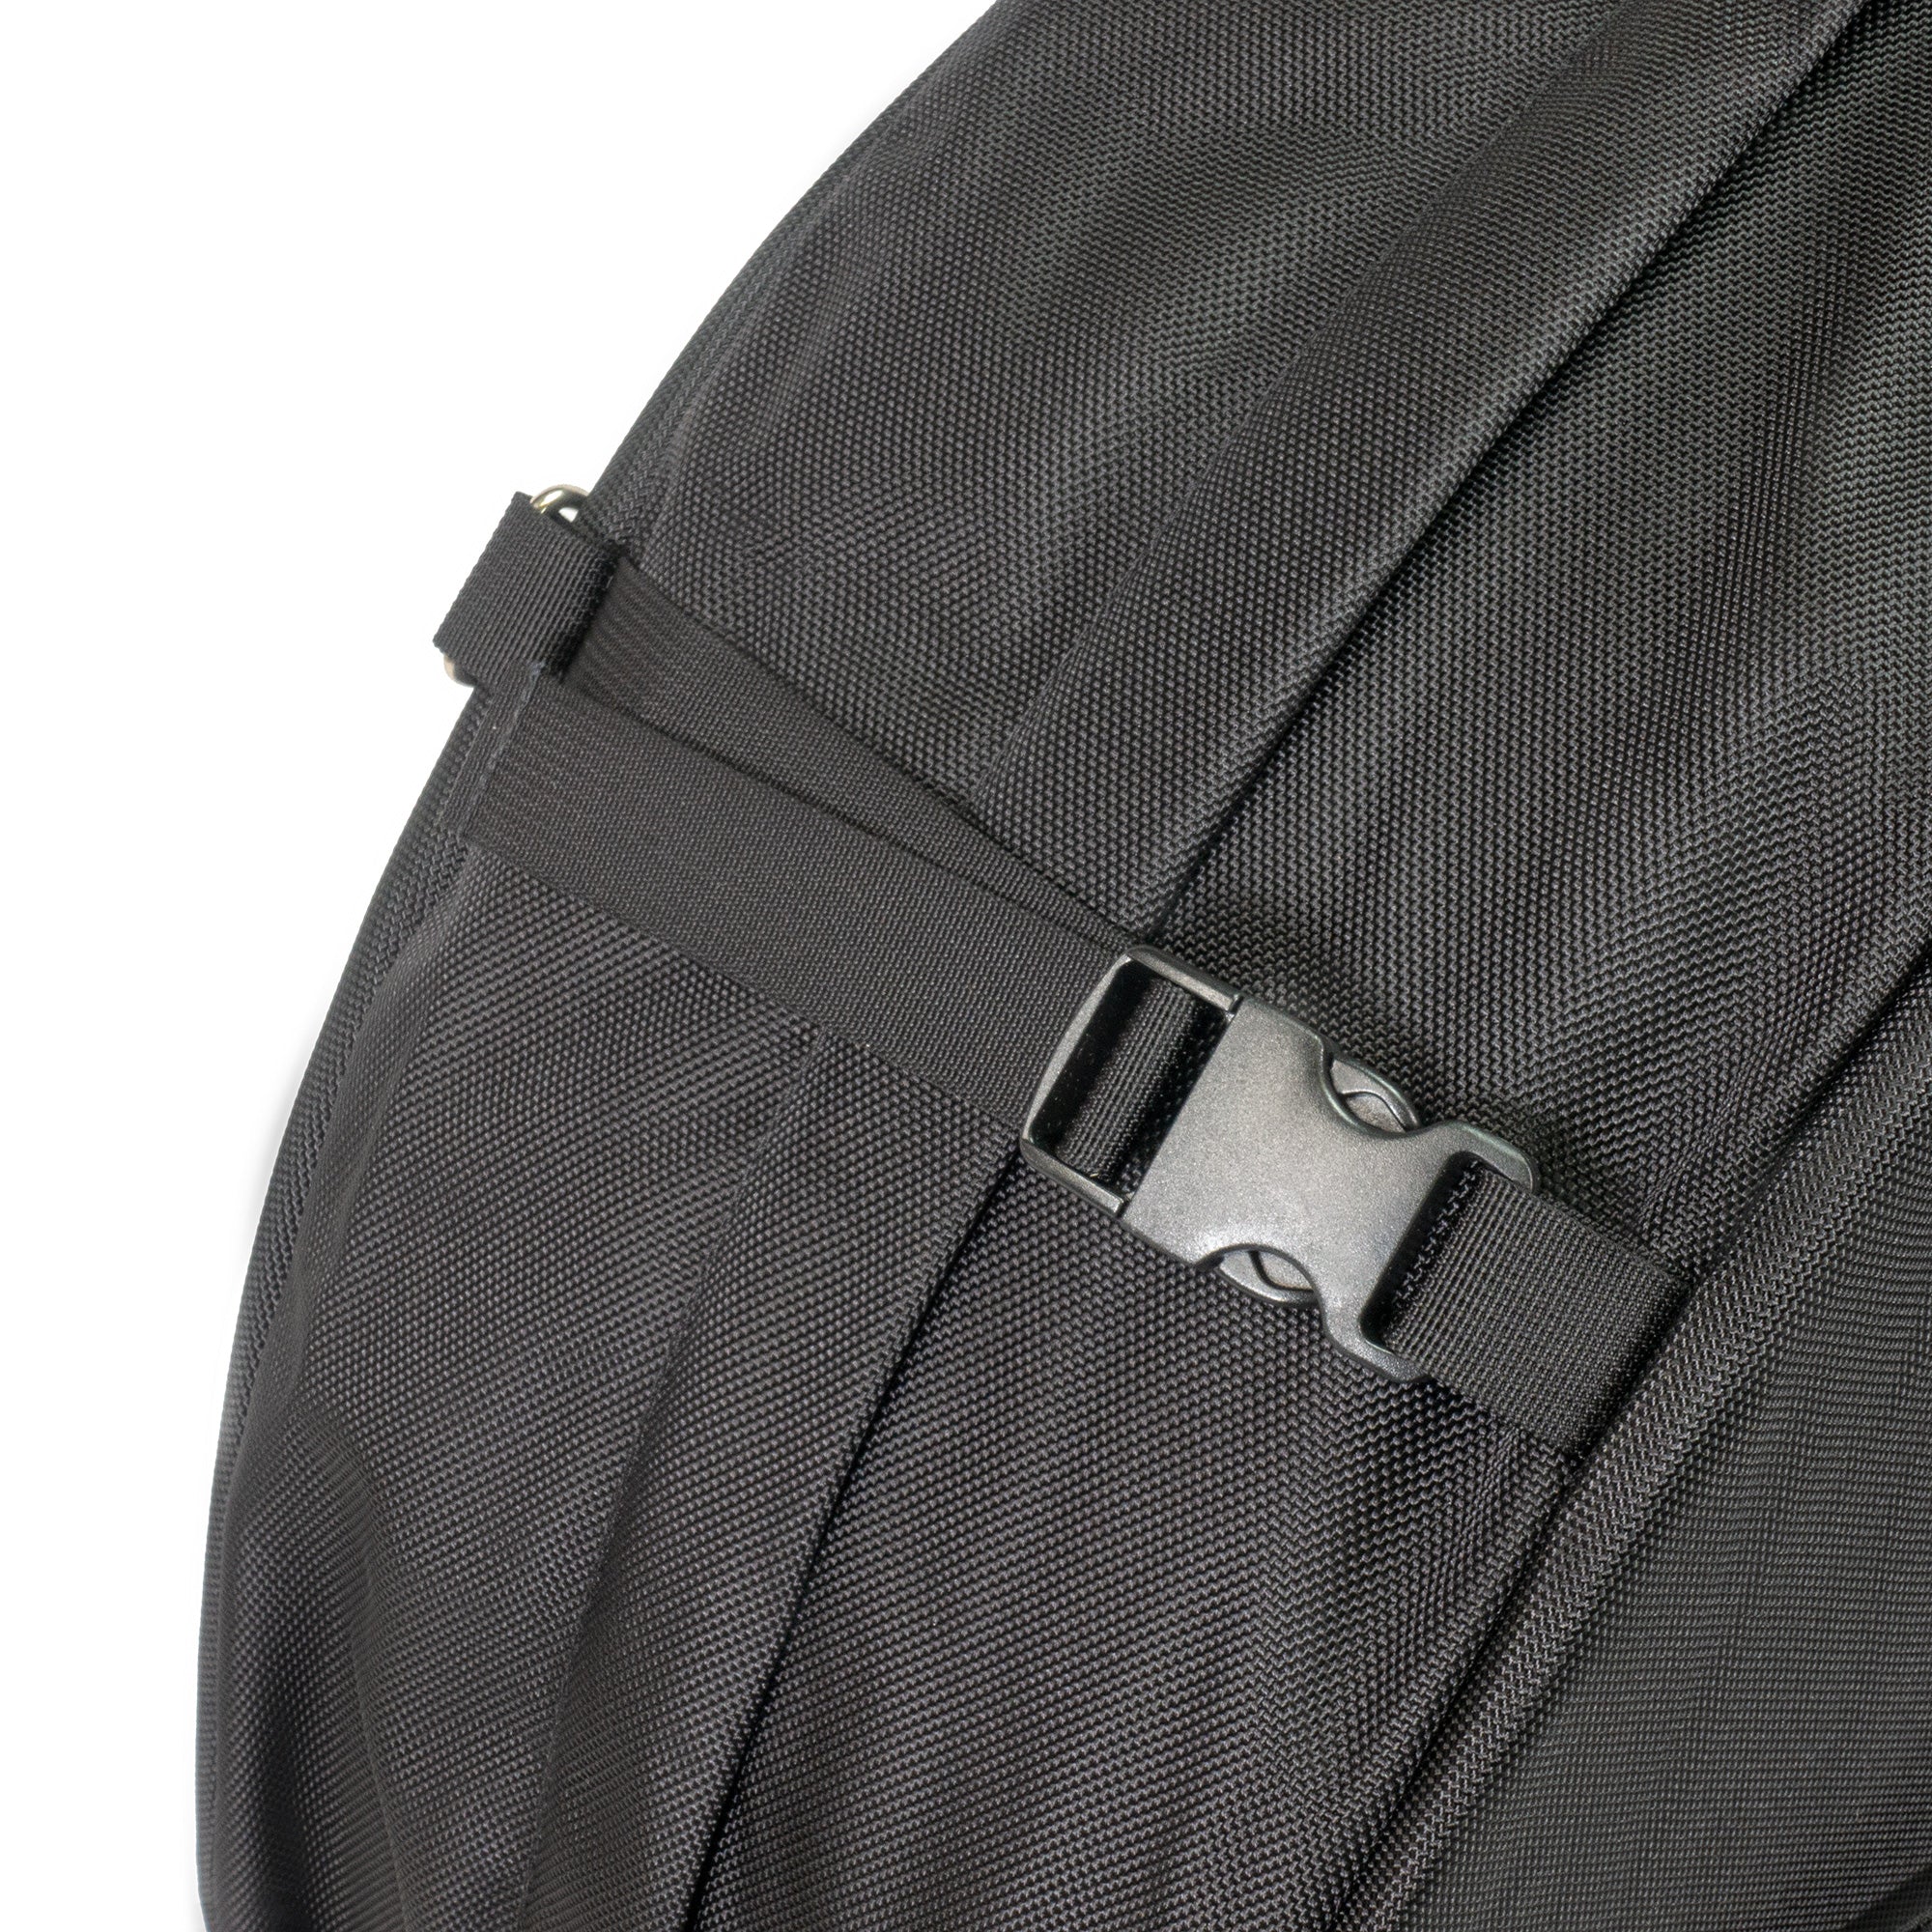 Orucase Airport Ninja Bike Travel Case -  close of up retention straps to reduce size of bulk